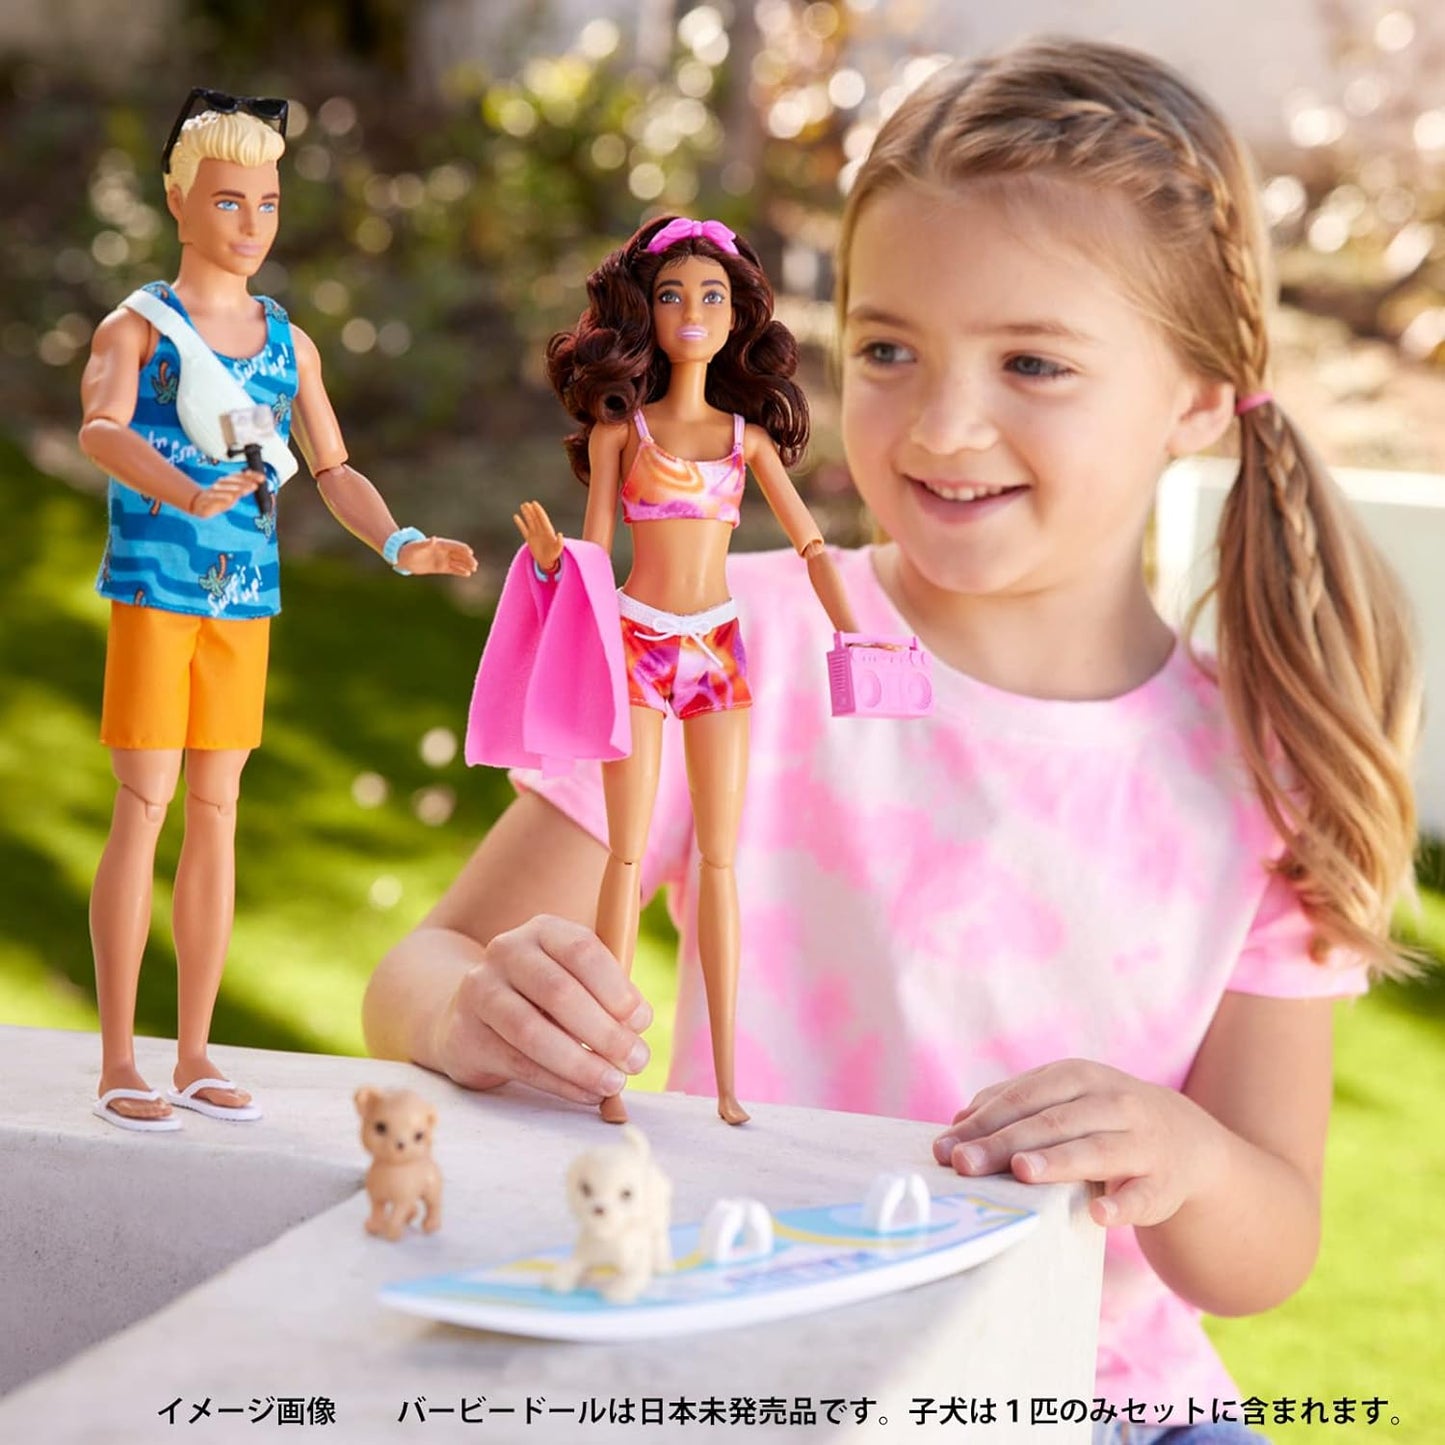 Barbie - Ken Doll With Surfboard HPT50